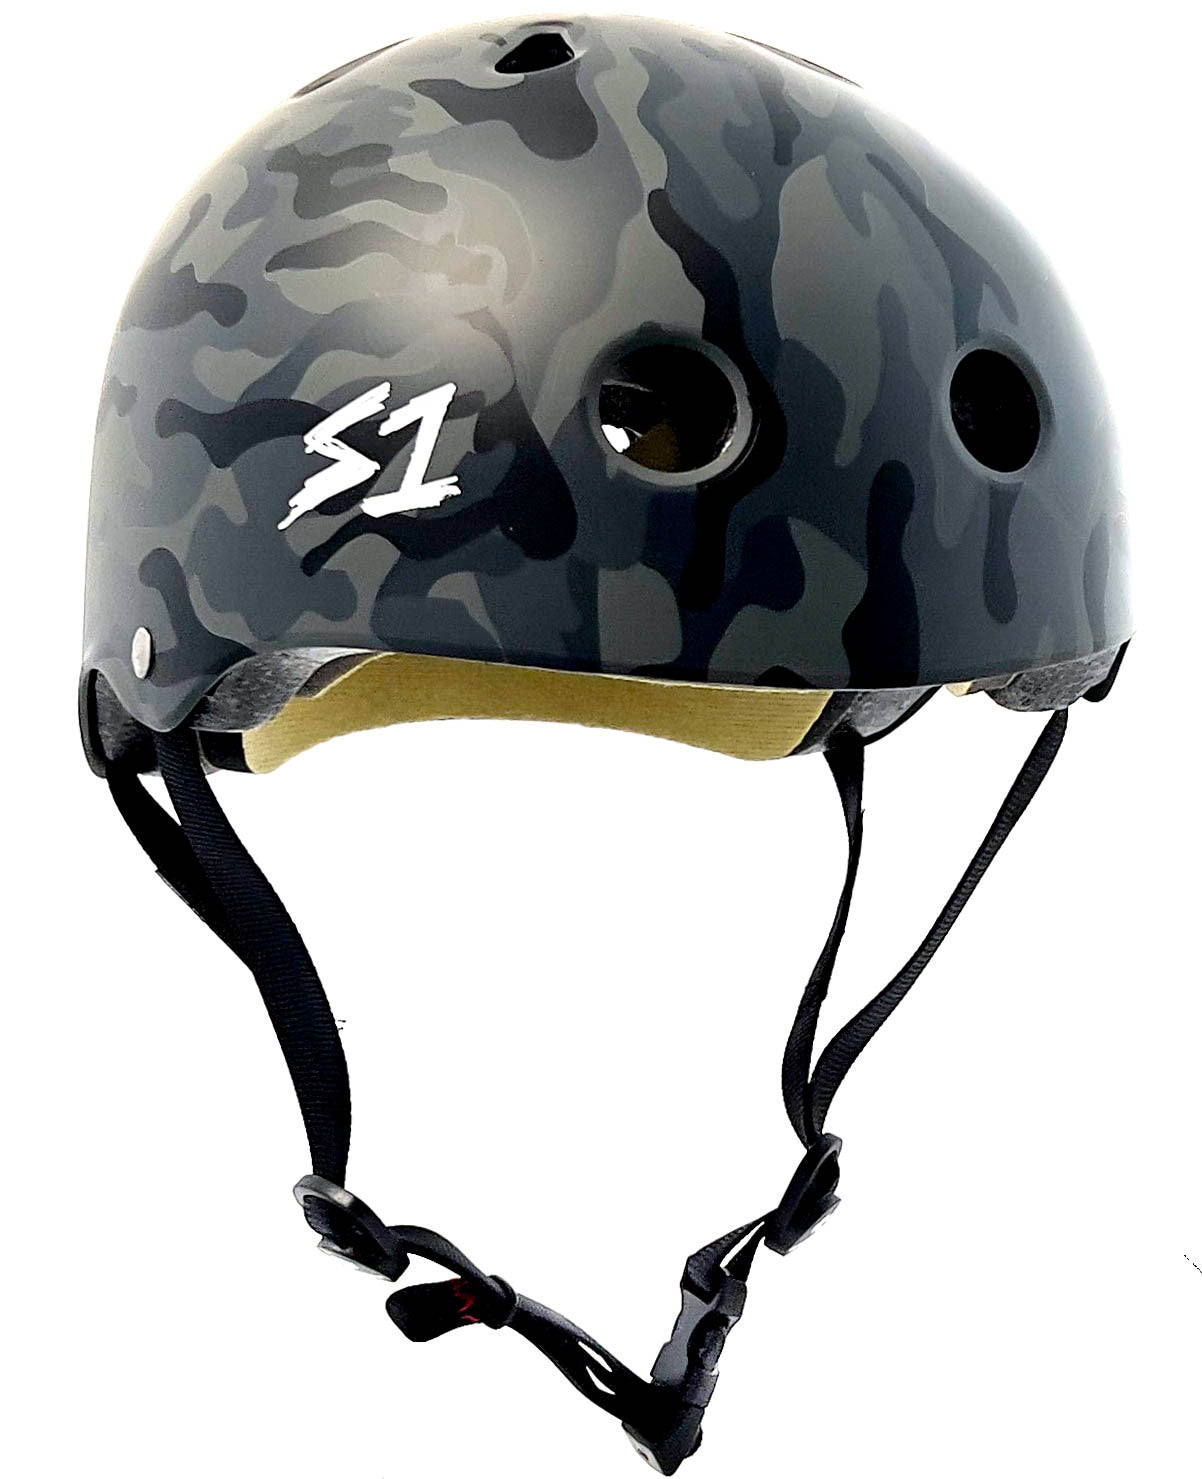 S1 Lifer Helmet - Black Camo